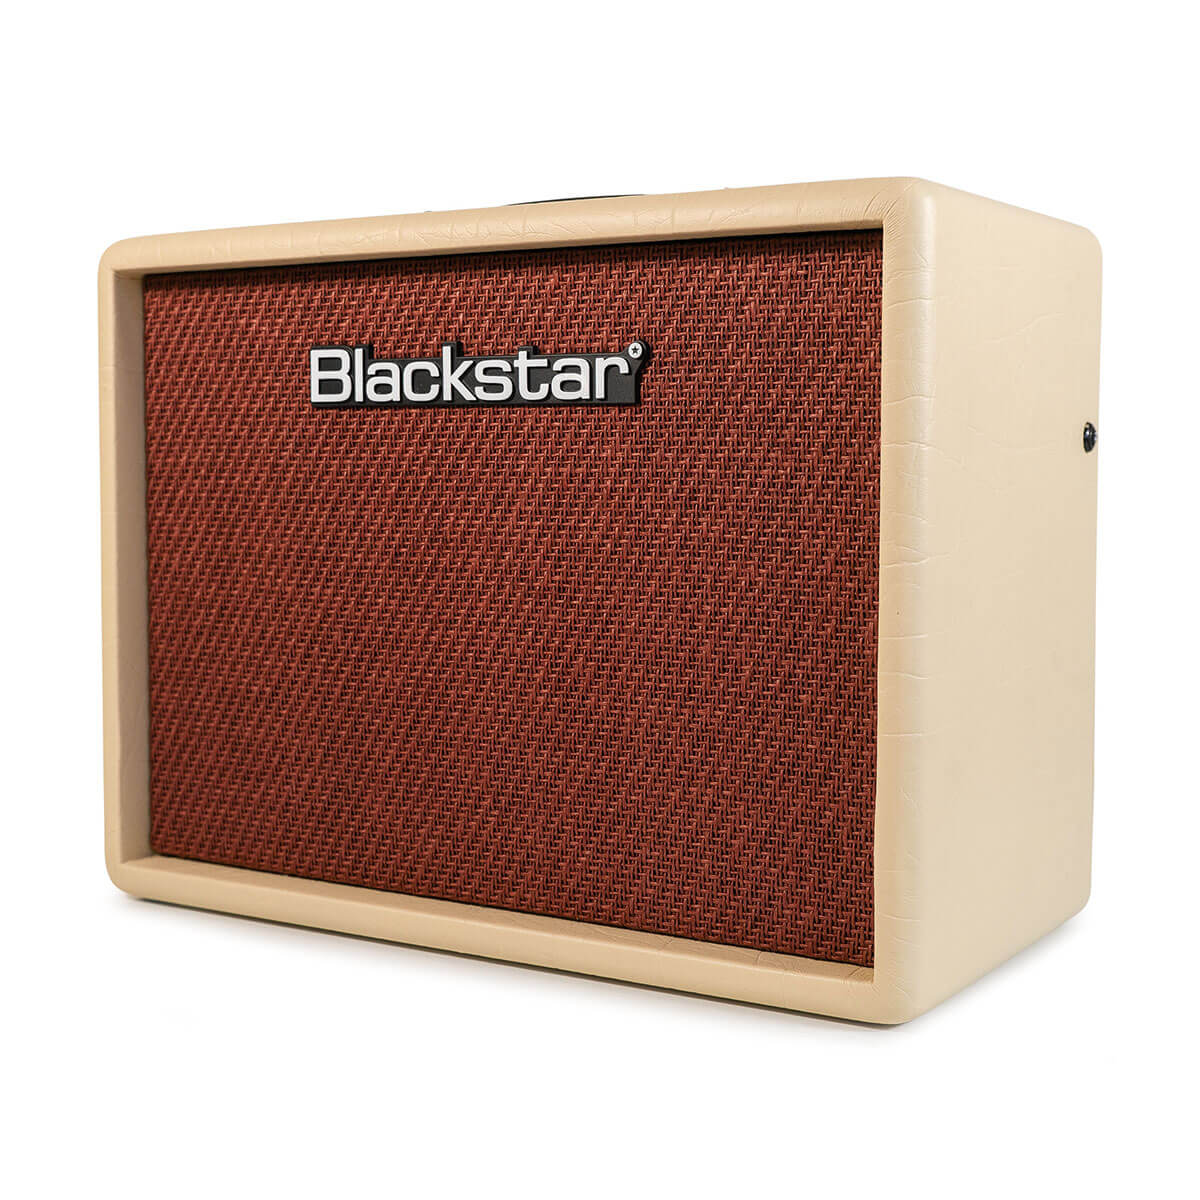 Blackstar Debut 15E guitar amp left